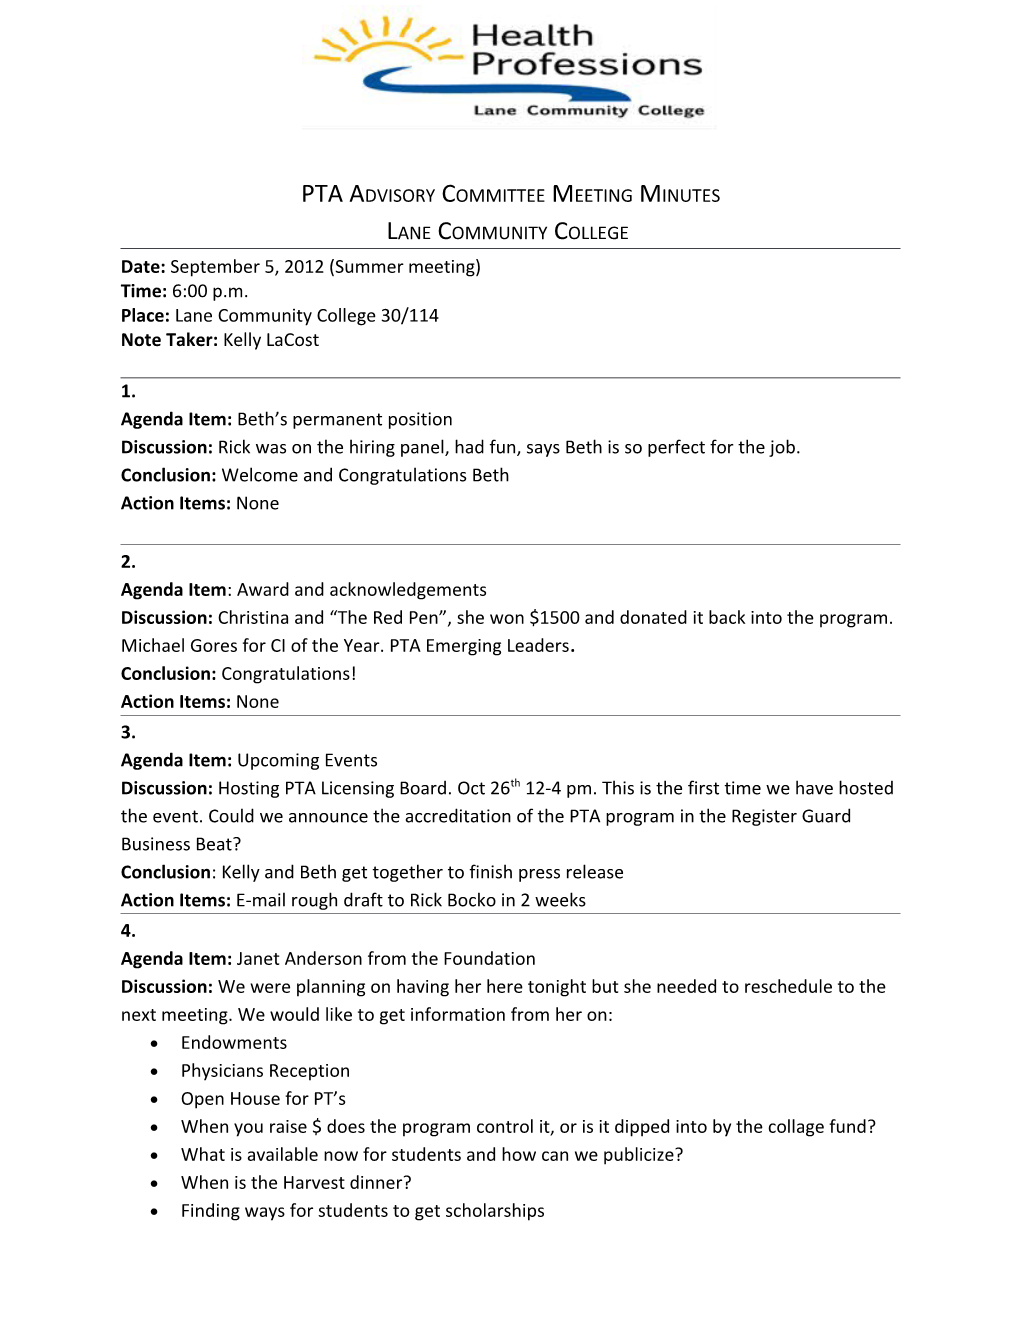 PTA Advisory Committee Meeting Minutes